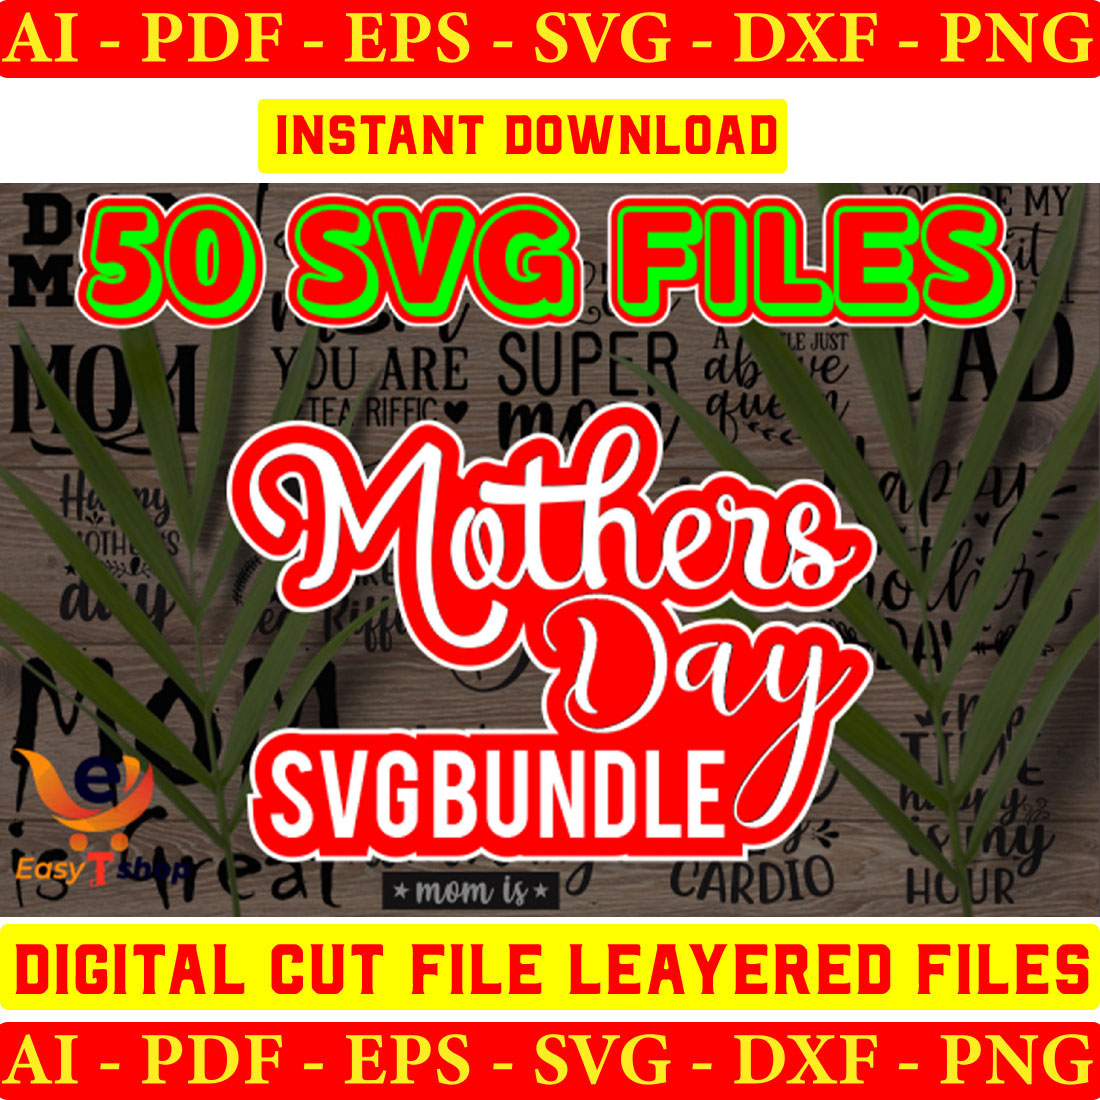 Mothers Day SVG Bundle Vol-02 cover image.